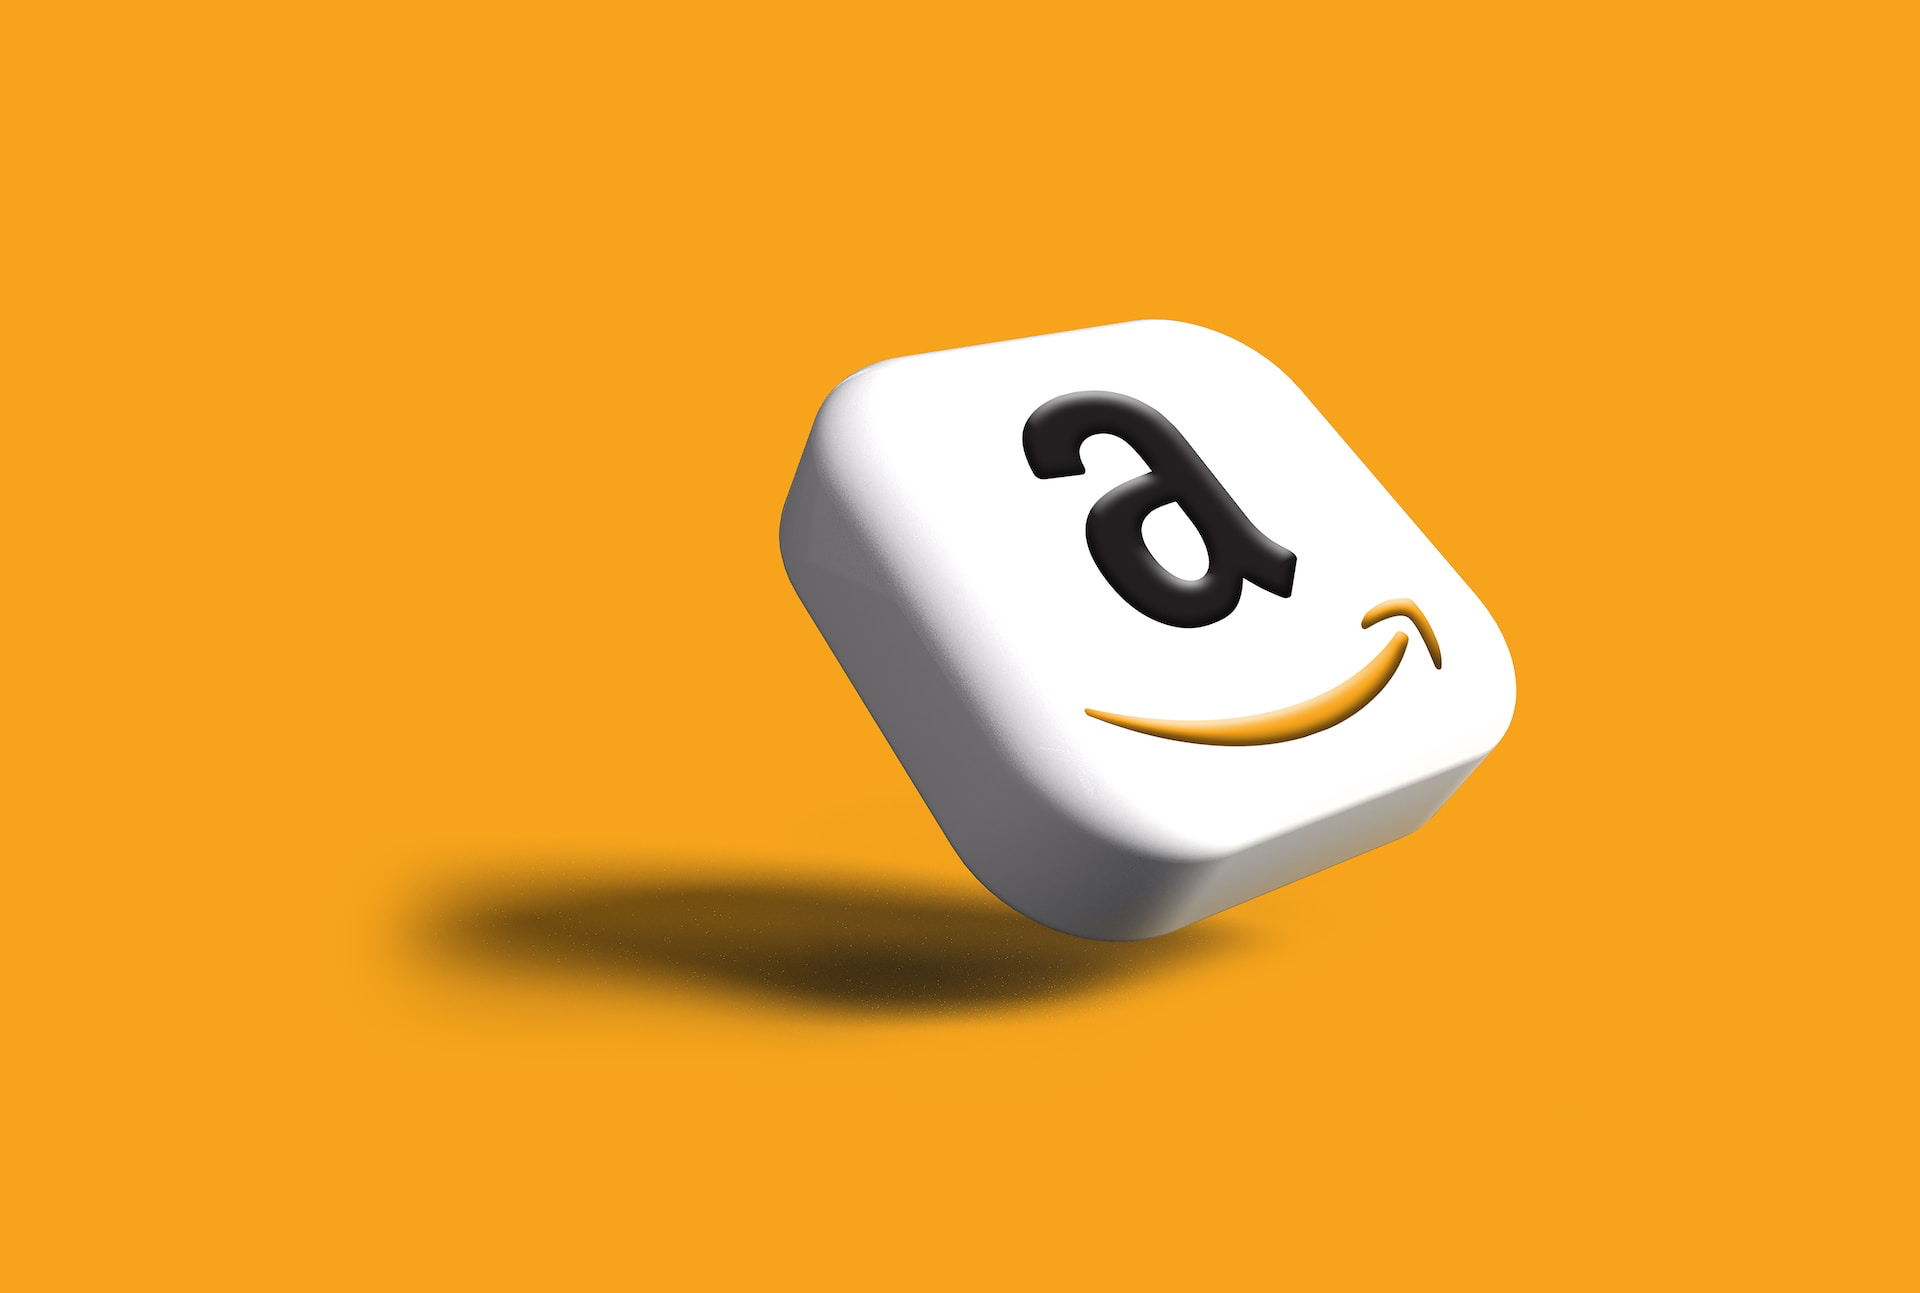 Jeff Bezos & ex wife, Mackenzie Scott gain $3.16 billion as Amazon shares rise